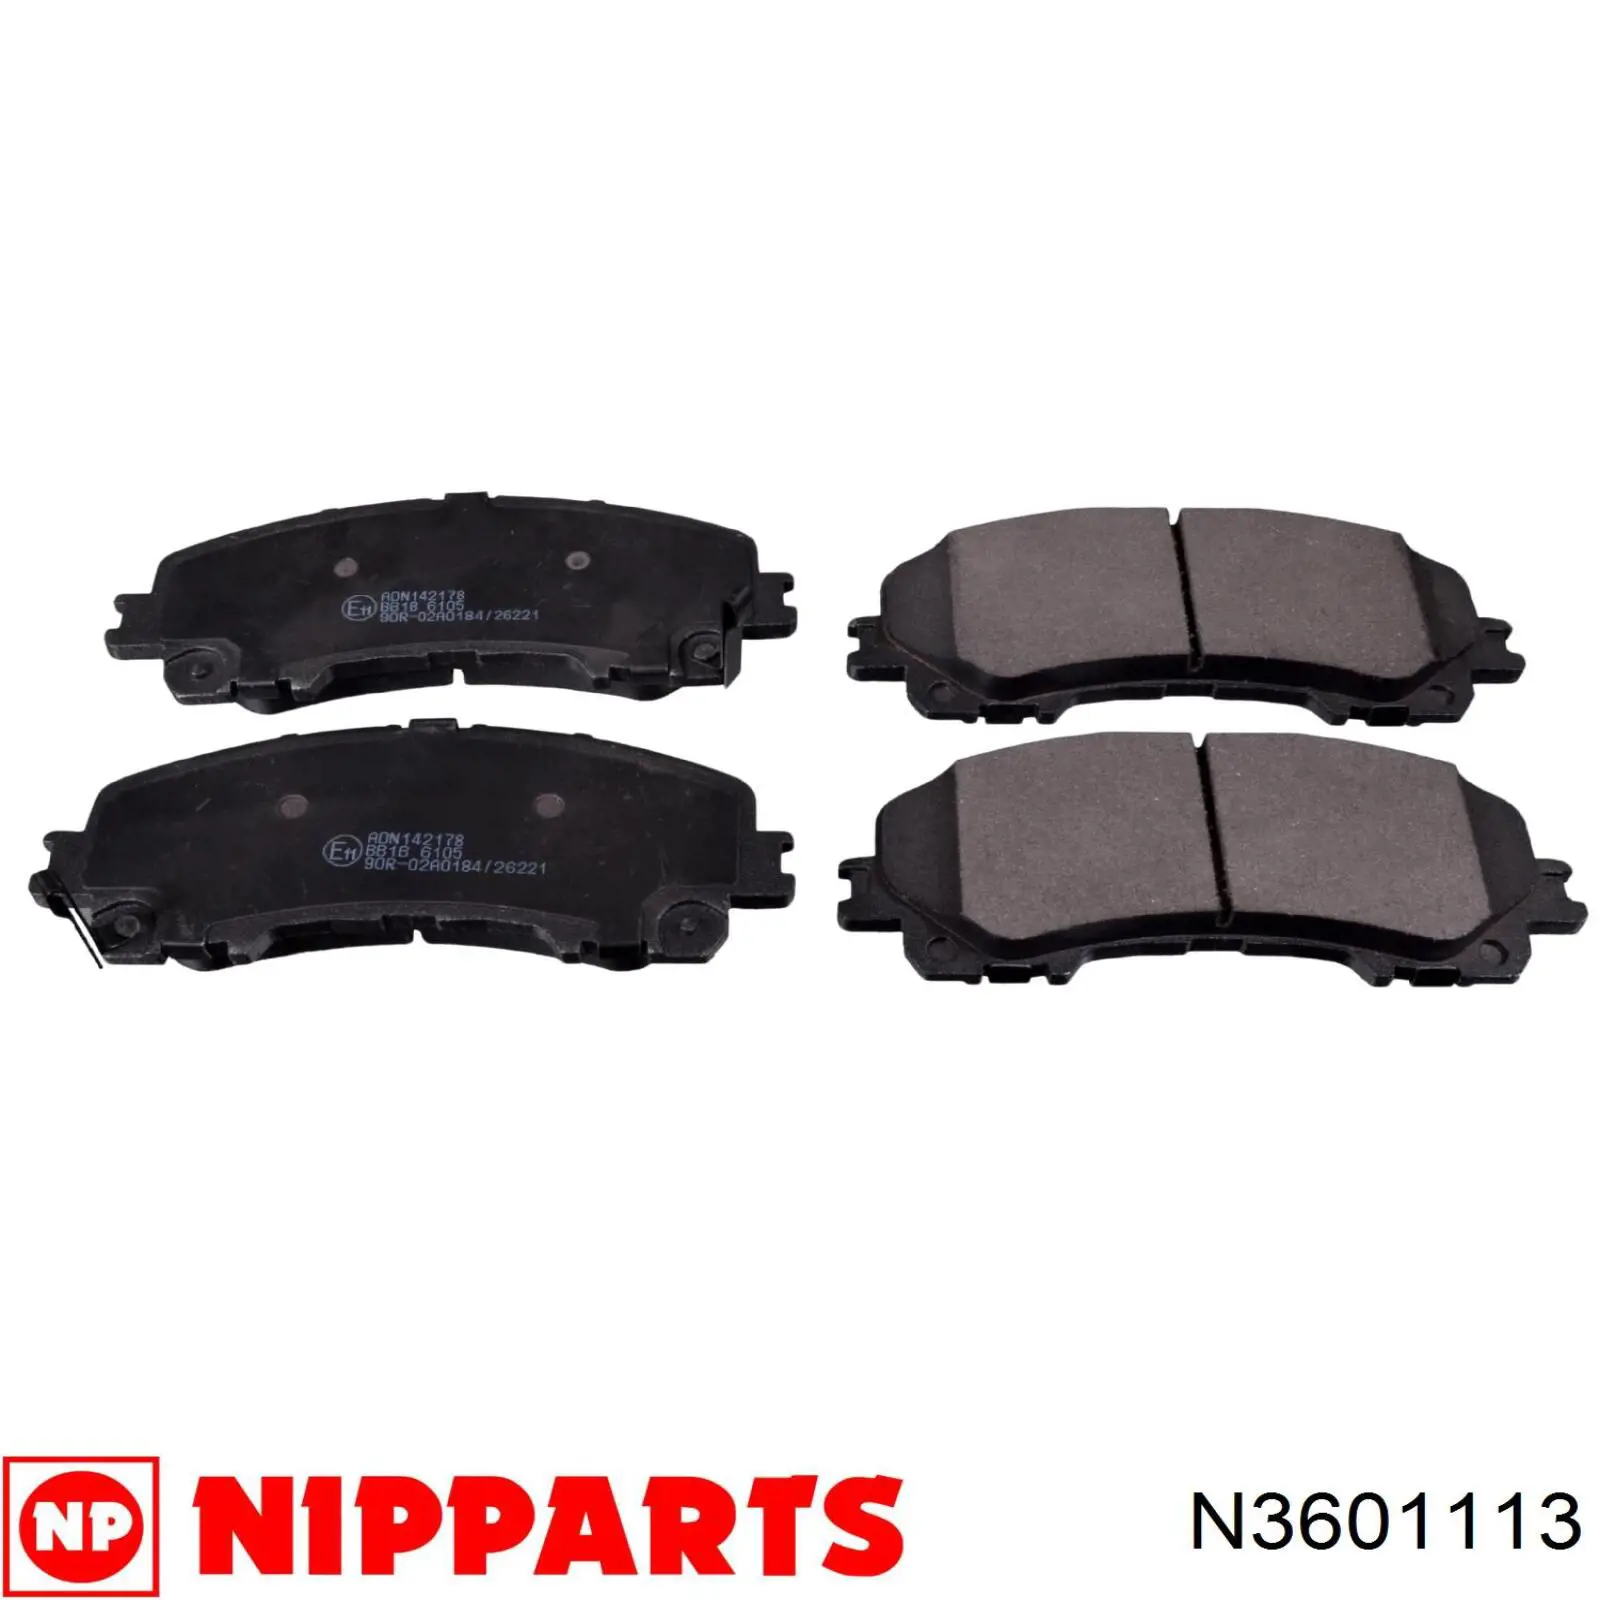 N3601113 Nipparts sapatas do freio dianteiras de disco